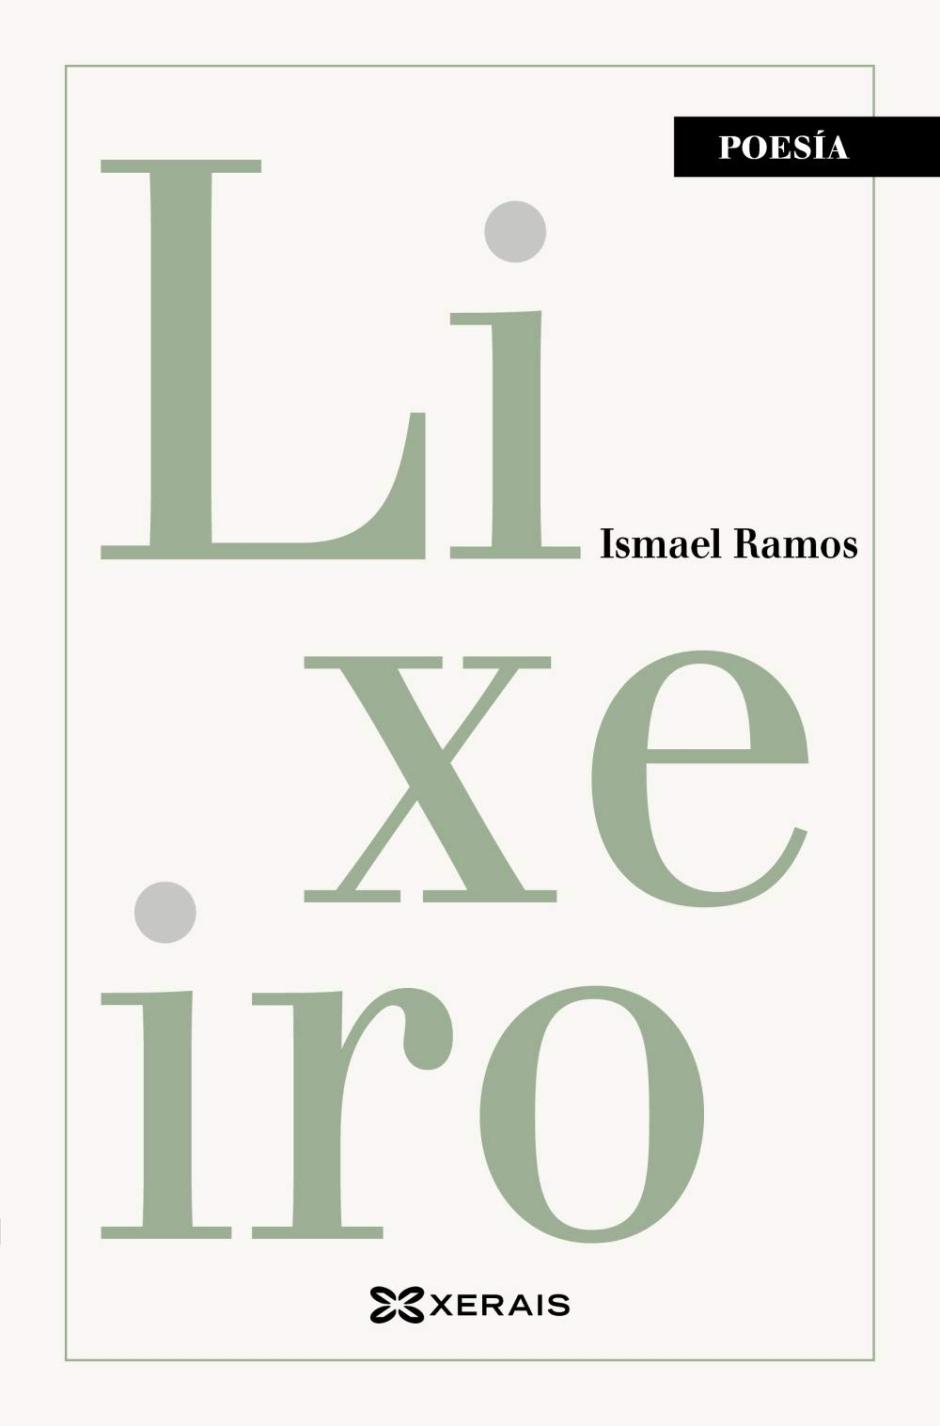 La obra 'Lixeiro', de Ismael Ramos